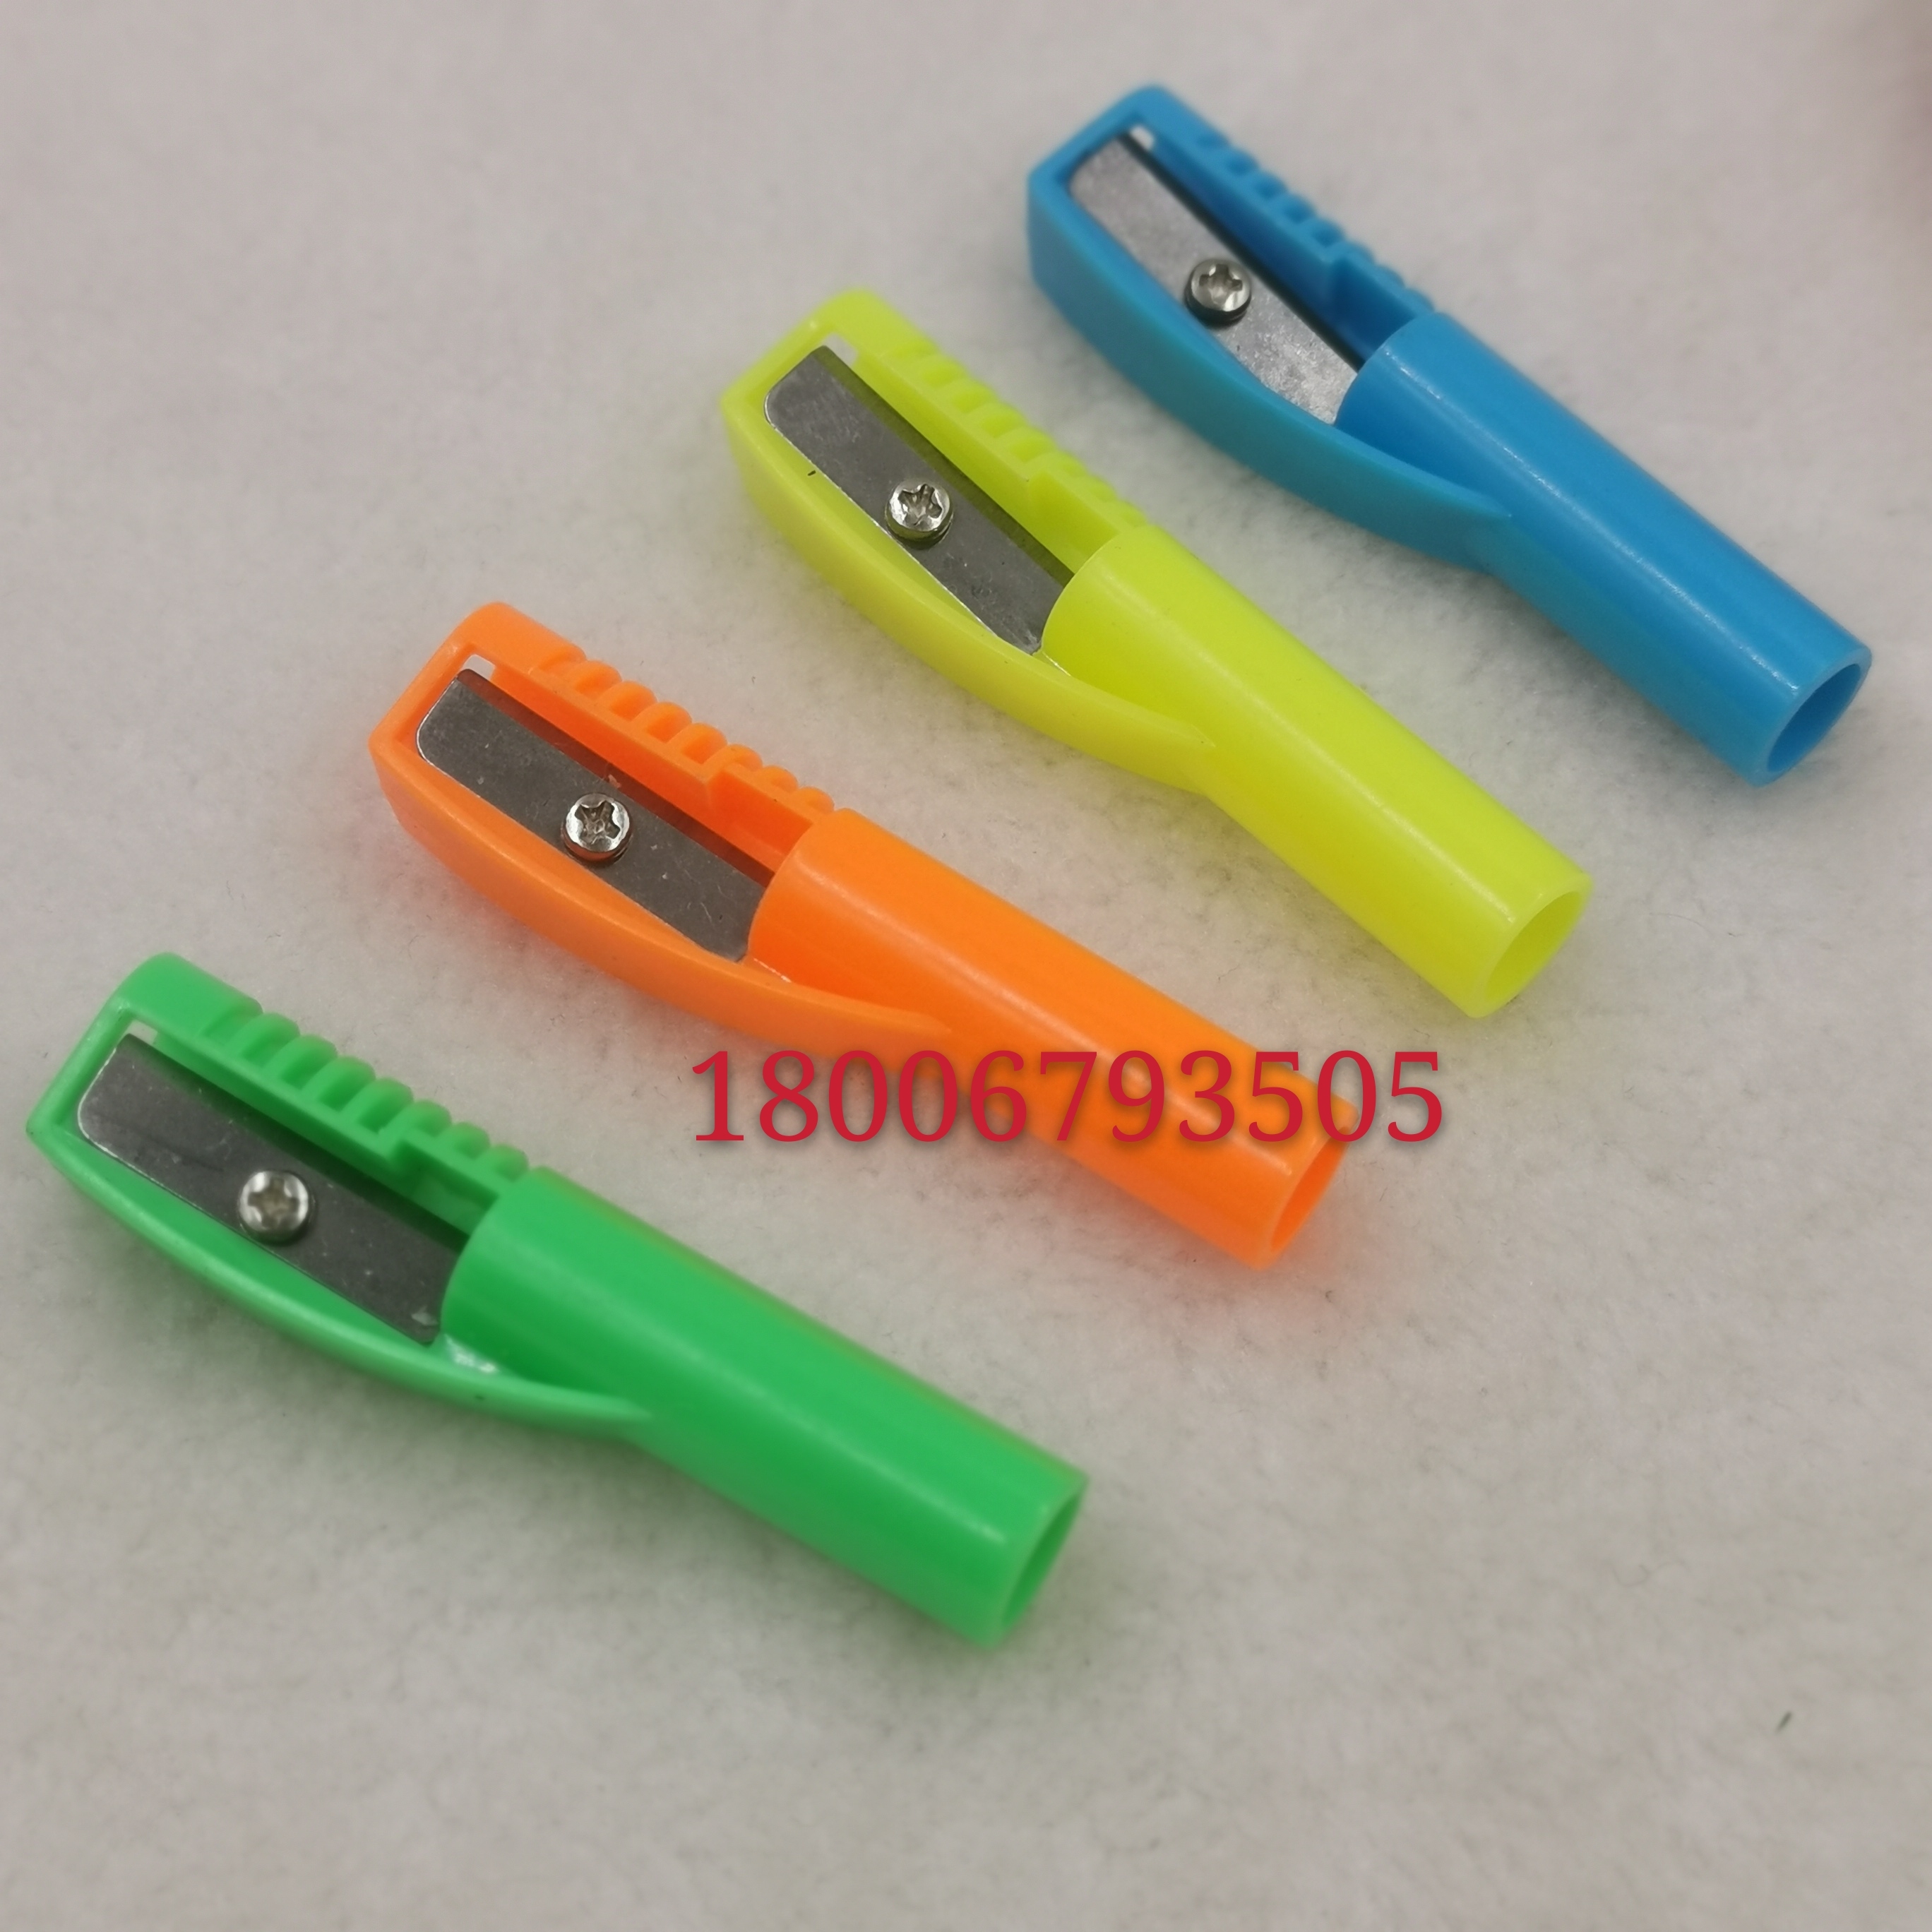 pencil sharpener stationery